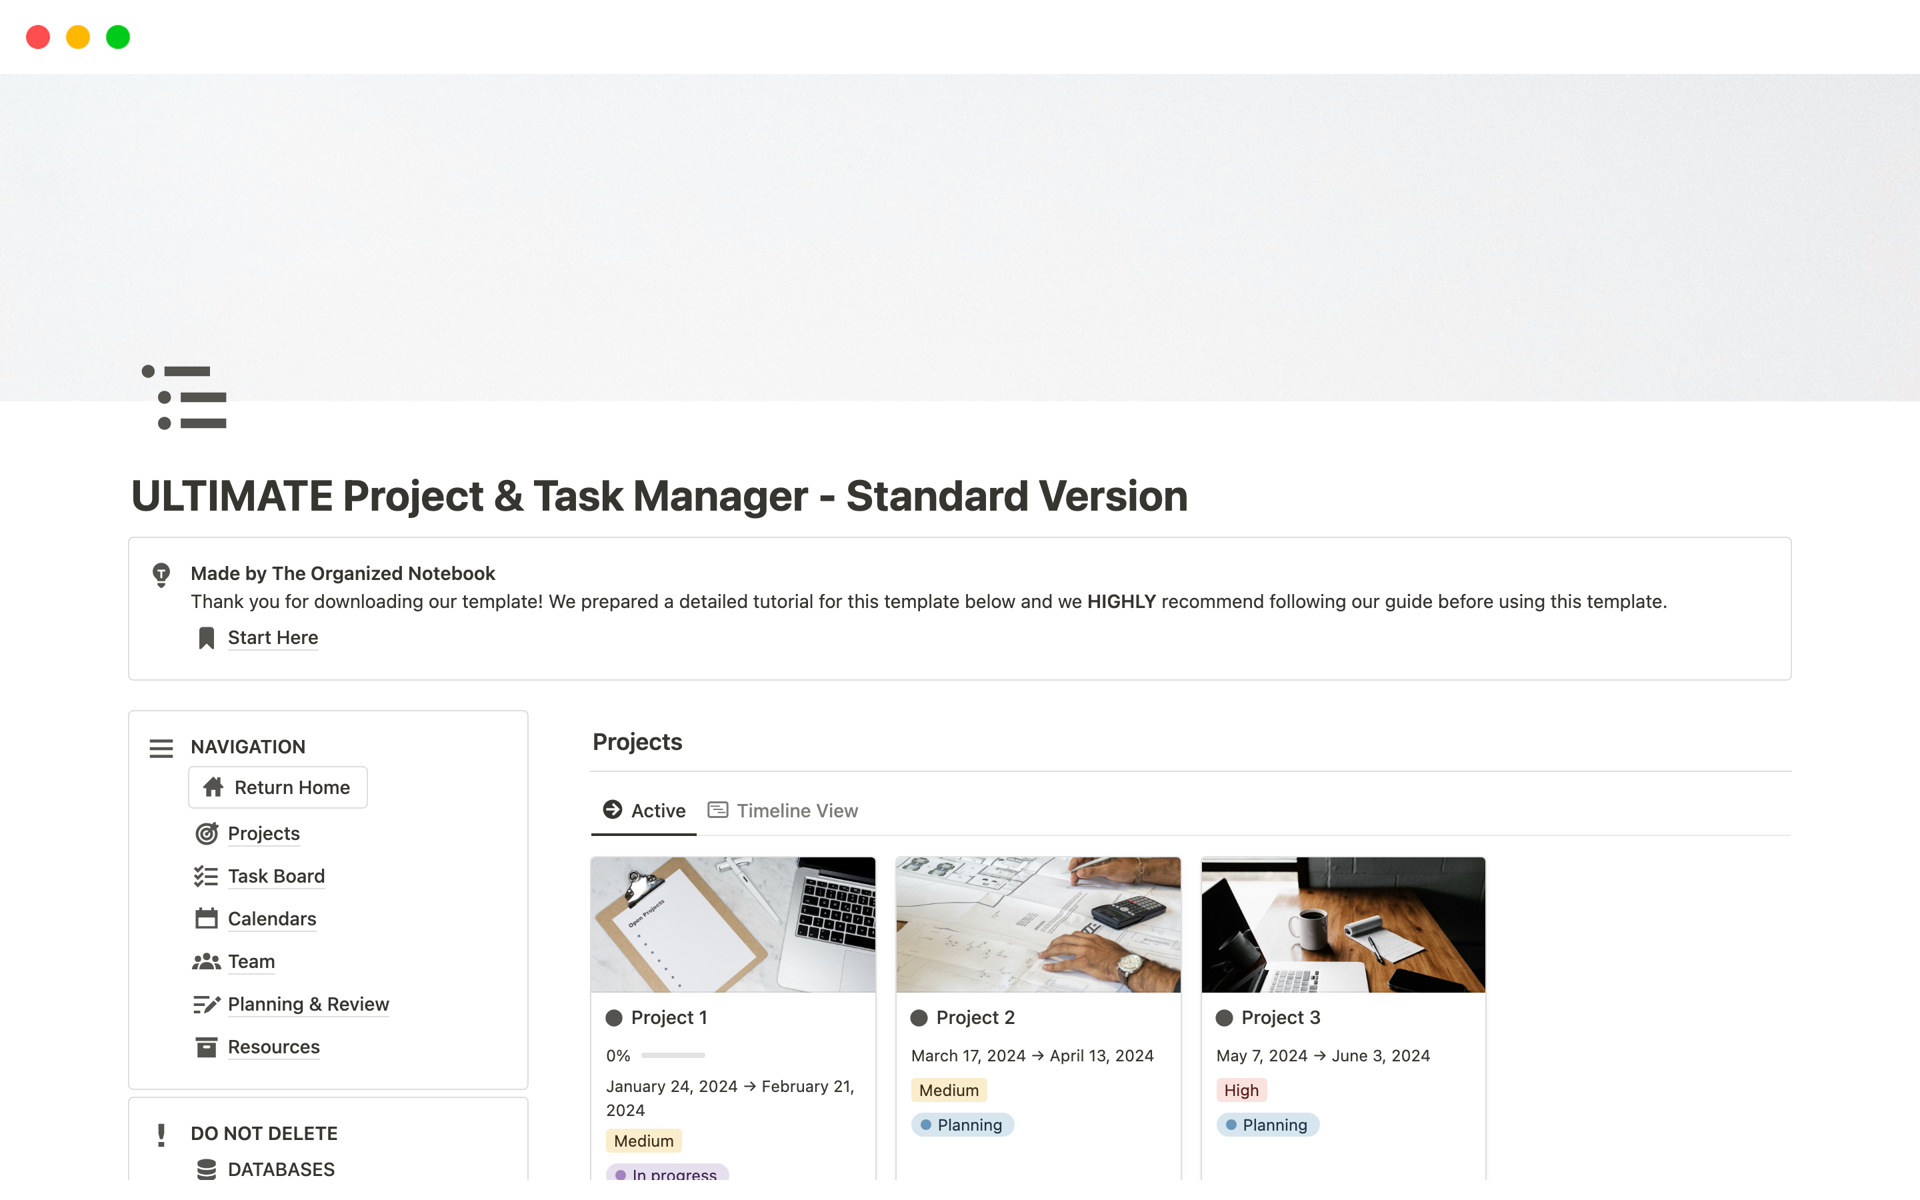 Vista previa de una plantilla para ULTIMATE Project & Task Manager - Standard Version